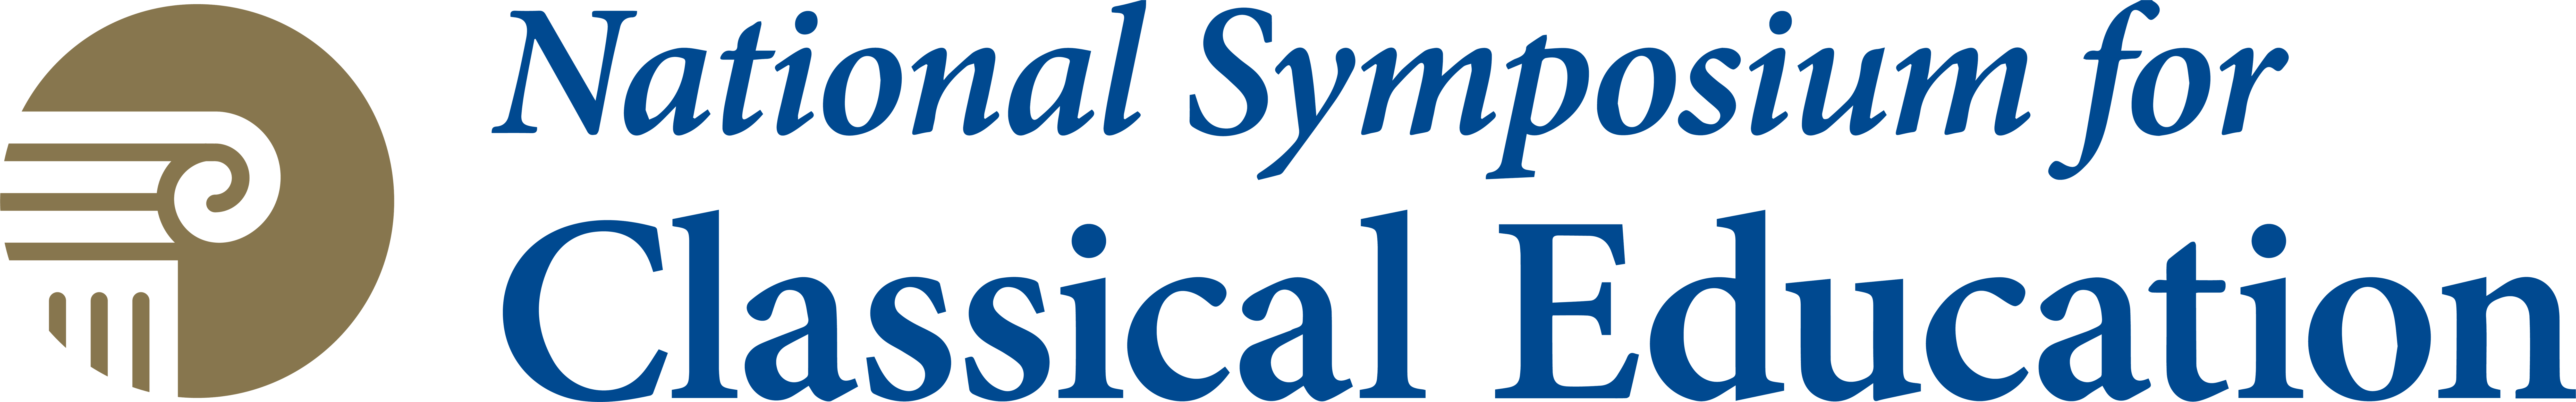 National Symposium for Classical Education logo